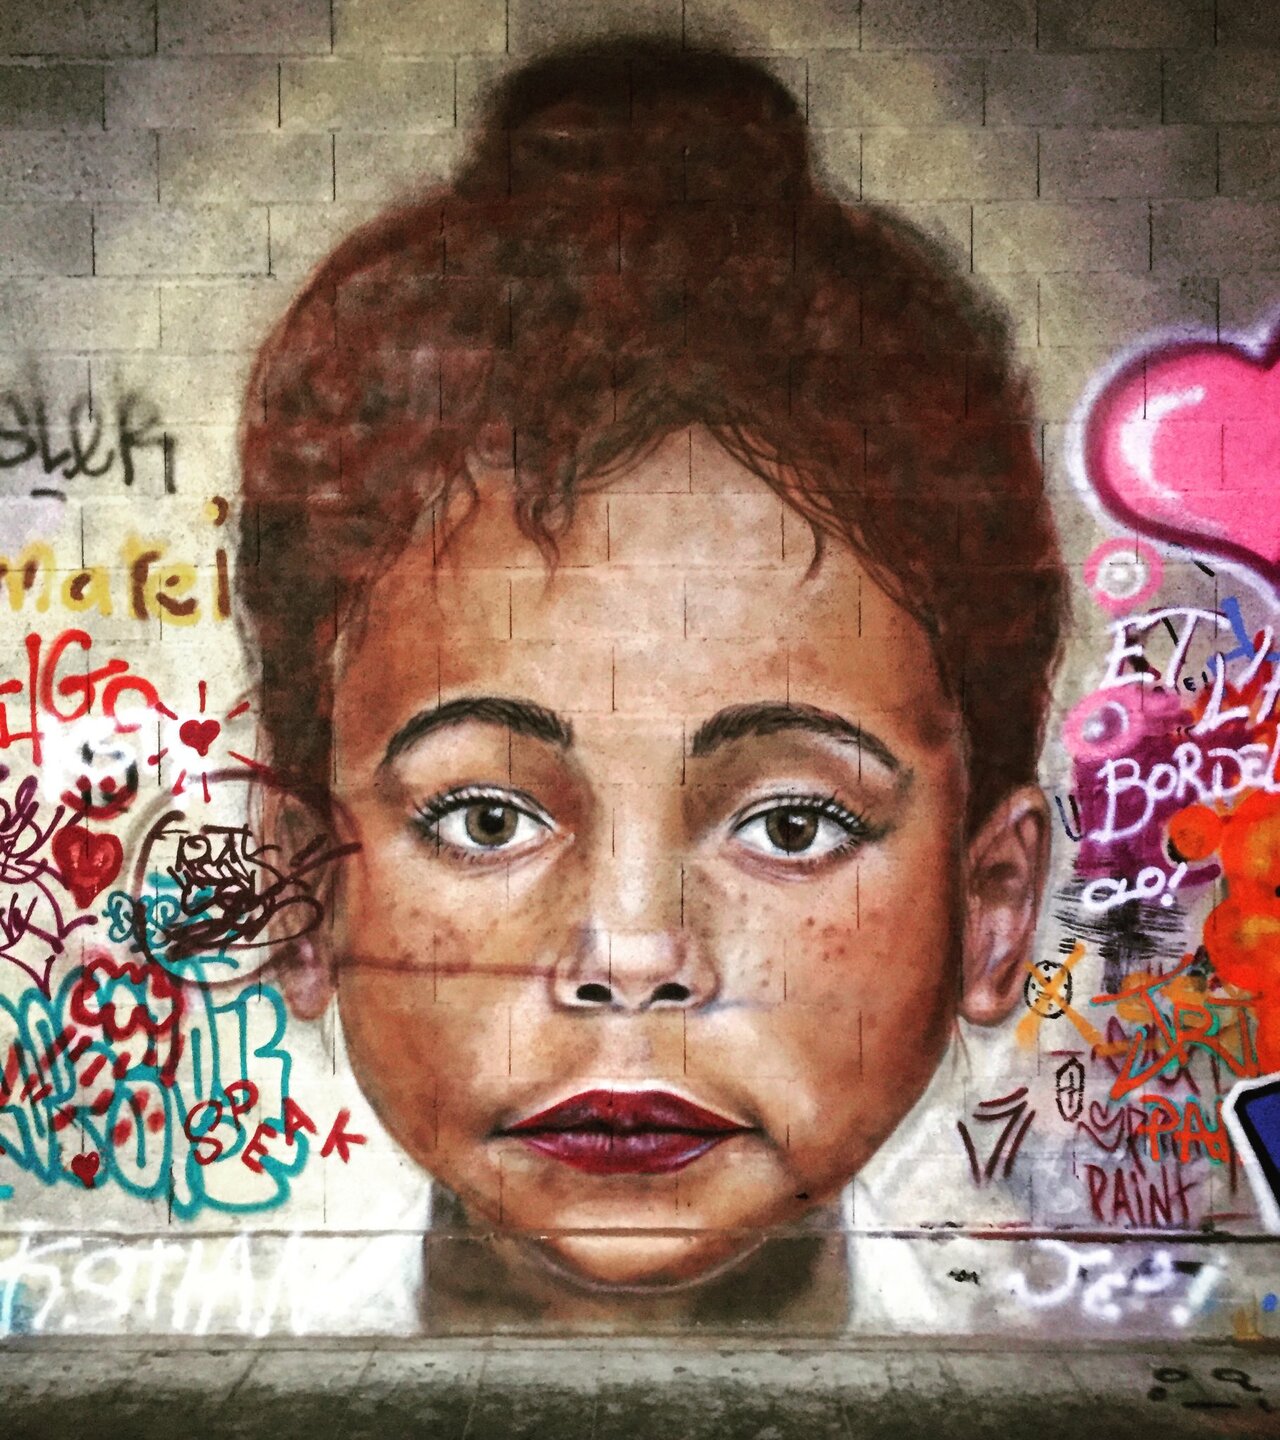 Lil'Gal by #septspraypaint #reunionisland in #paris at #laerosol  #streetart #graffiti #graff #spray #bombing #wall #urbanart #paris https://t.co/tYcf5M647c